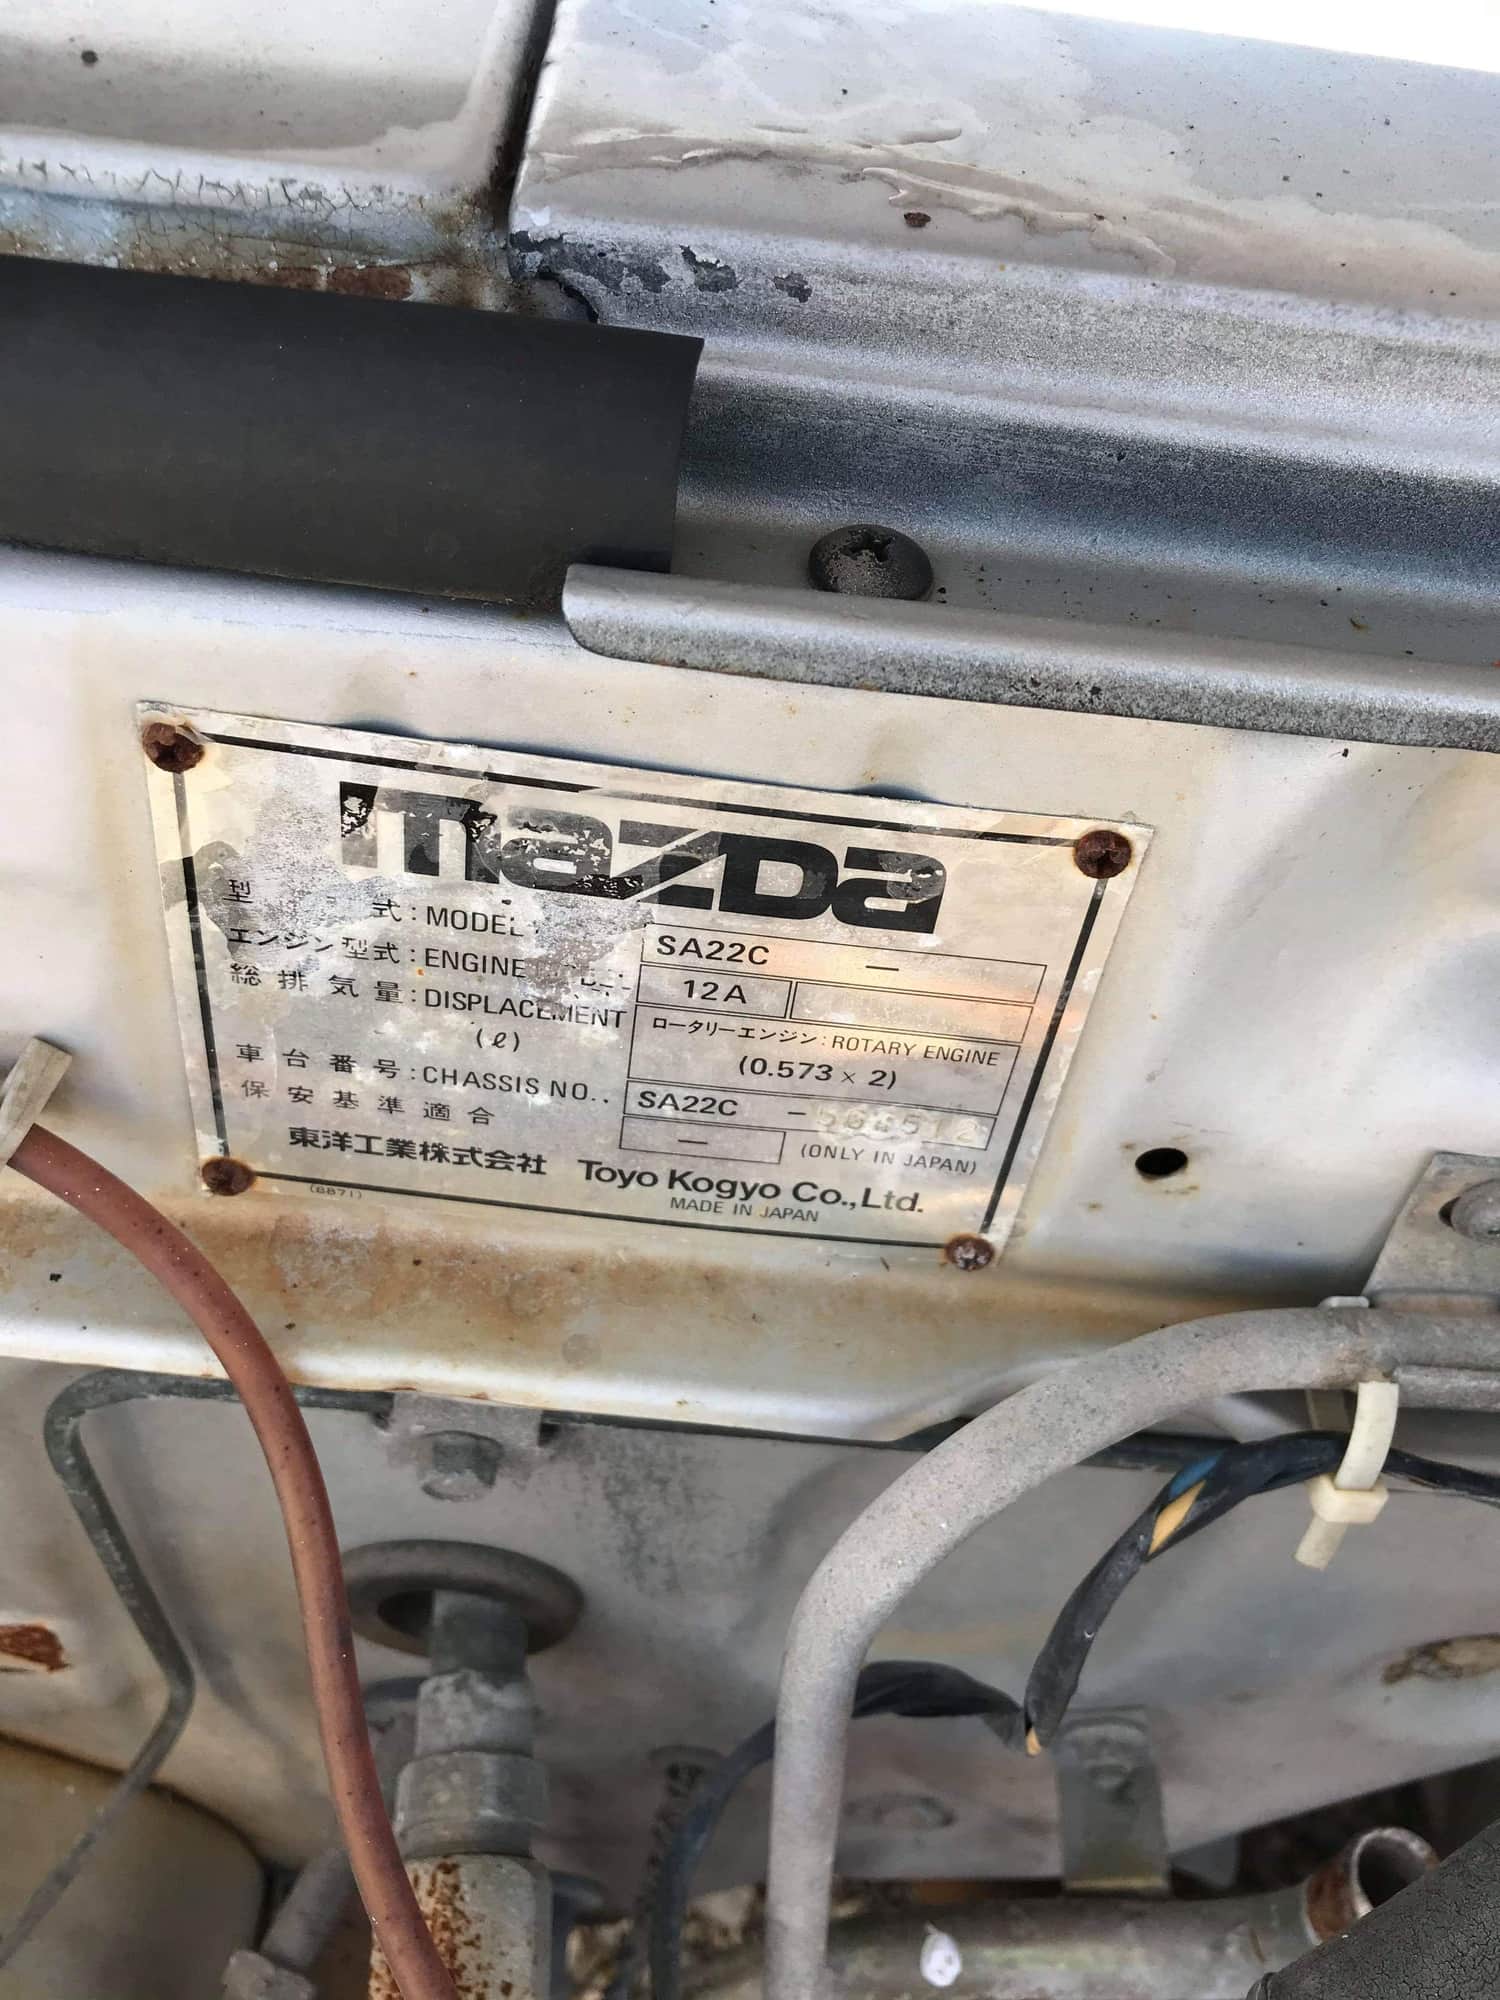 1979 Mazda RX-7 - 2x 1979 RX7s (1x LE), 1x 1980 RX7 (Solar Gold) - San Antonio, TX 78209, United States